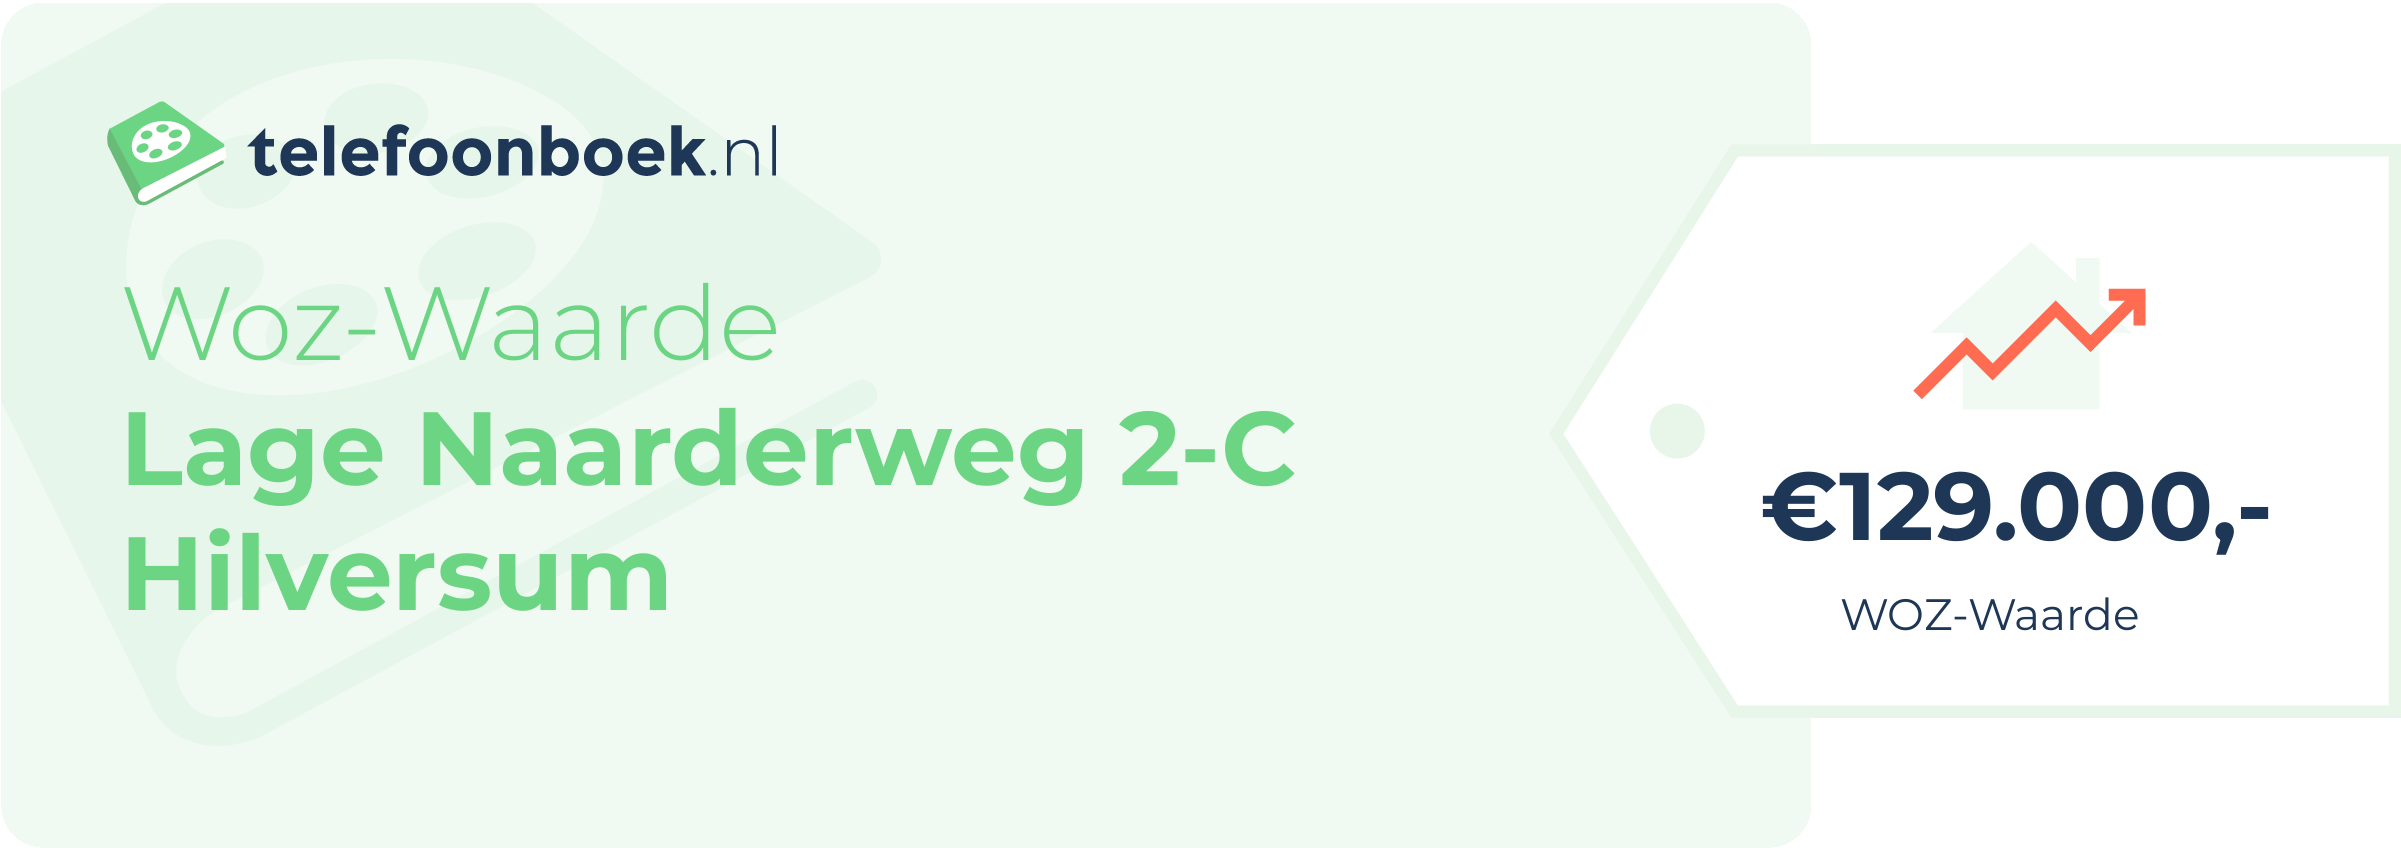 WOZ-waarde Lage Naarderweg 2-C Hilversum